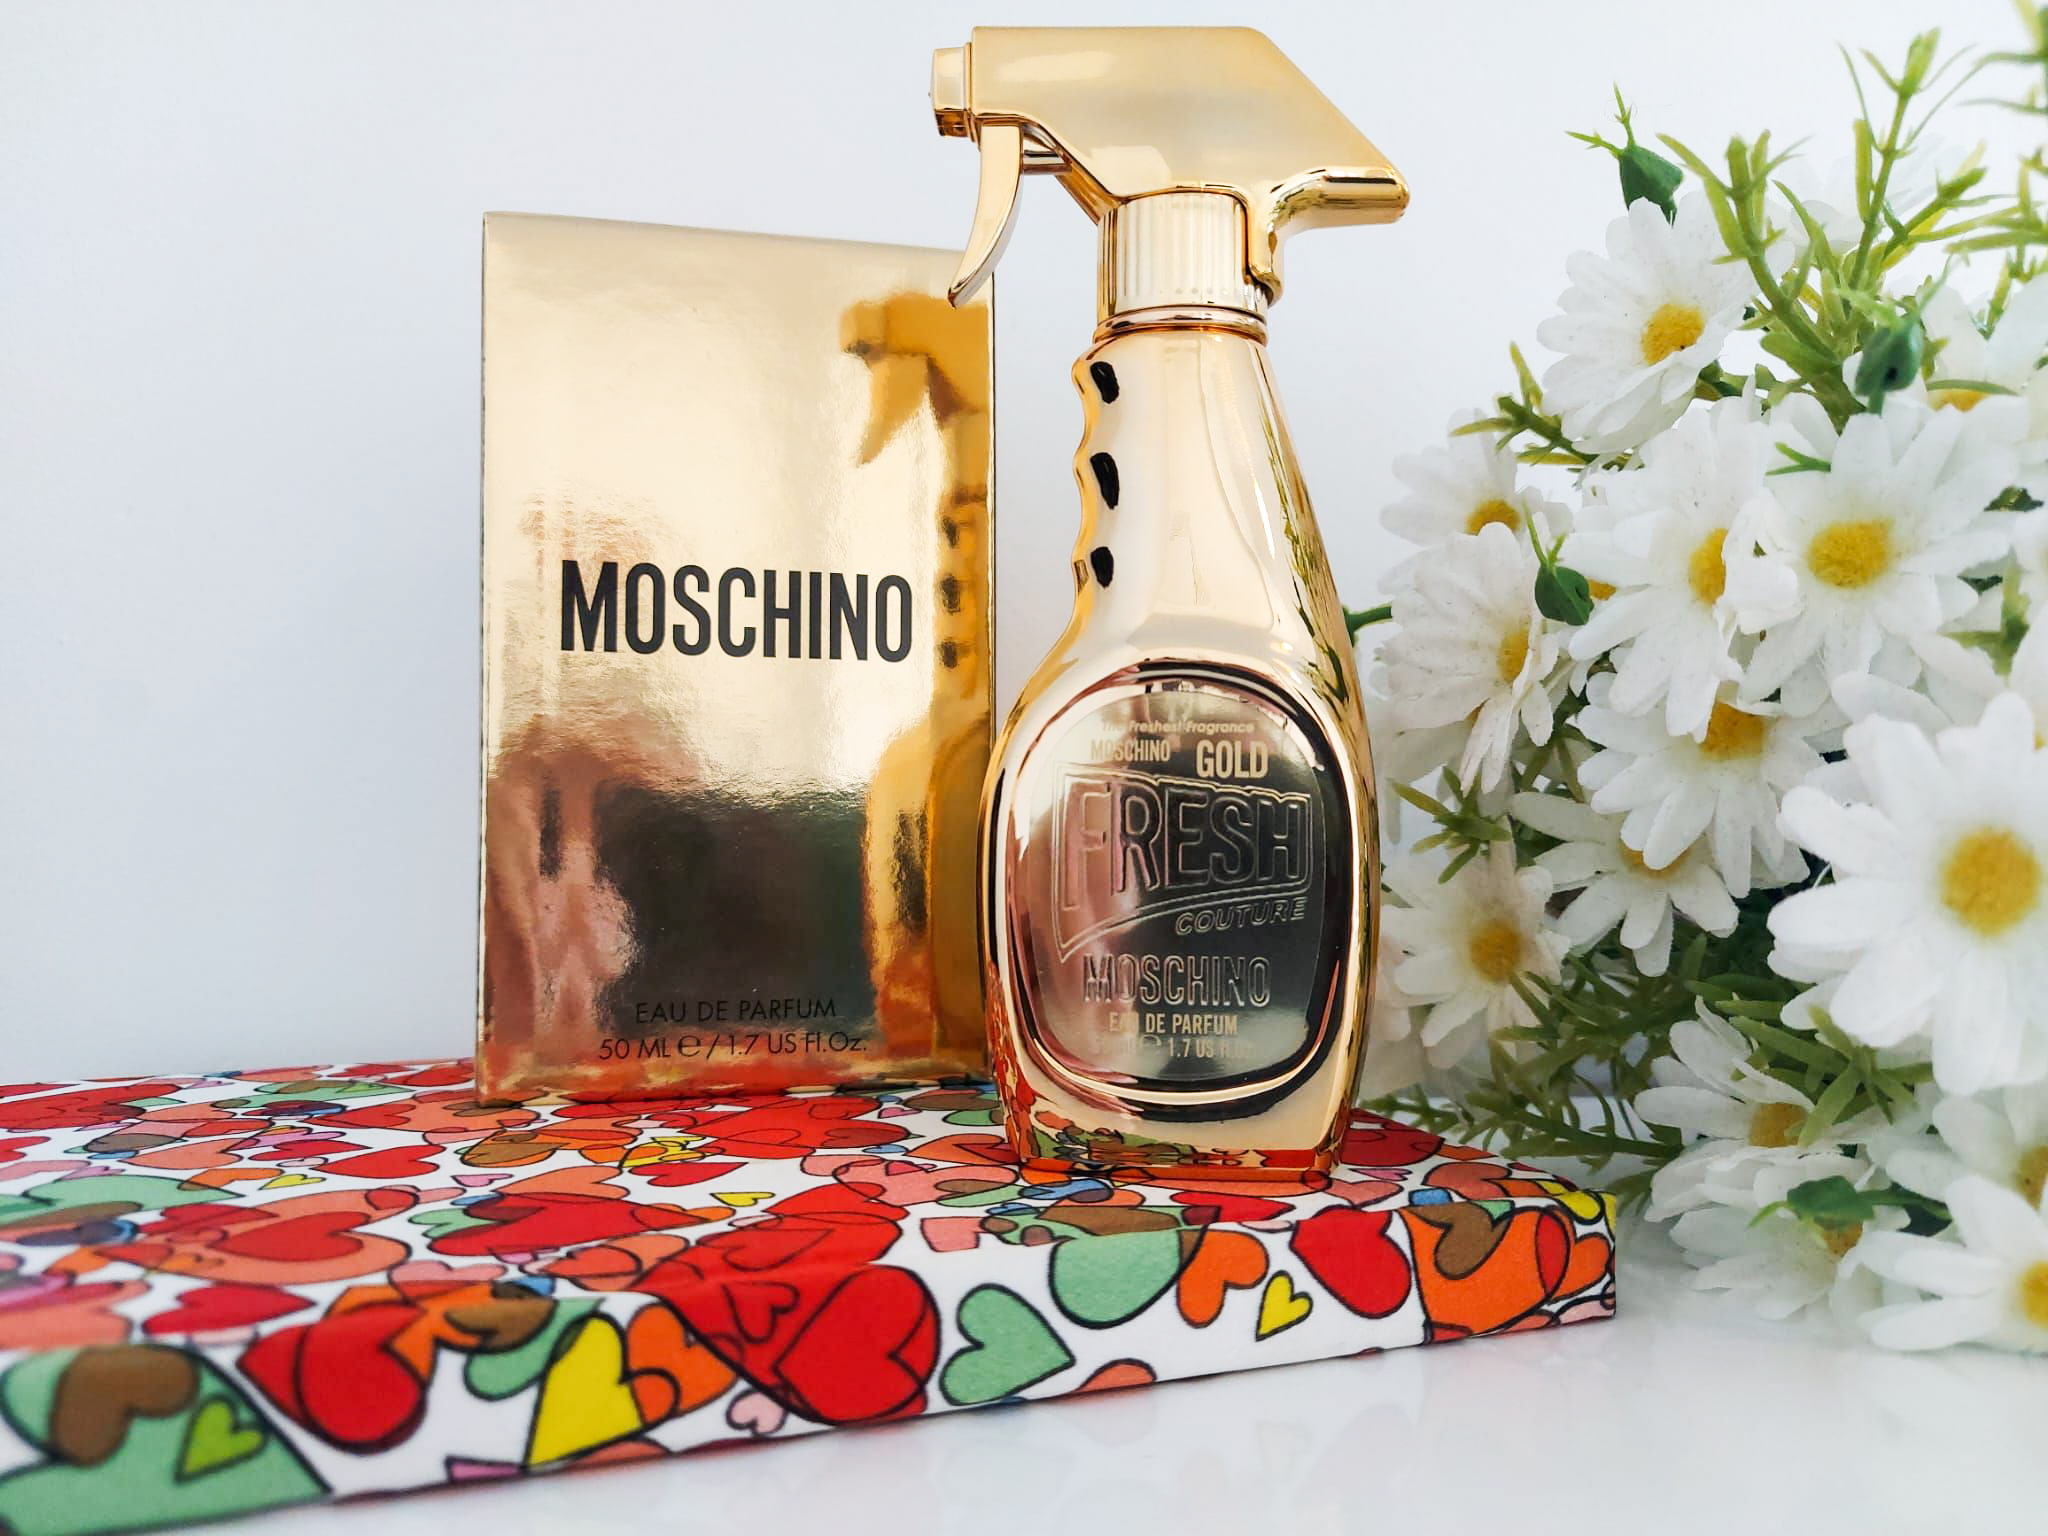 Moschino Gold Fresh Couture. Moschino духи золотые.